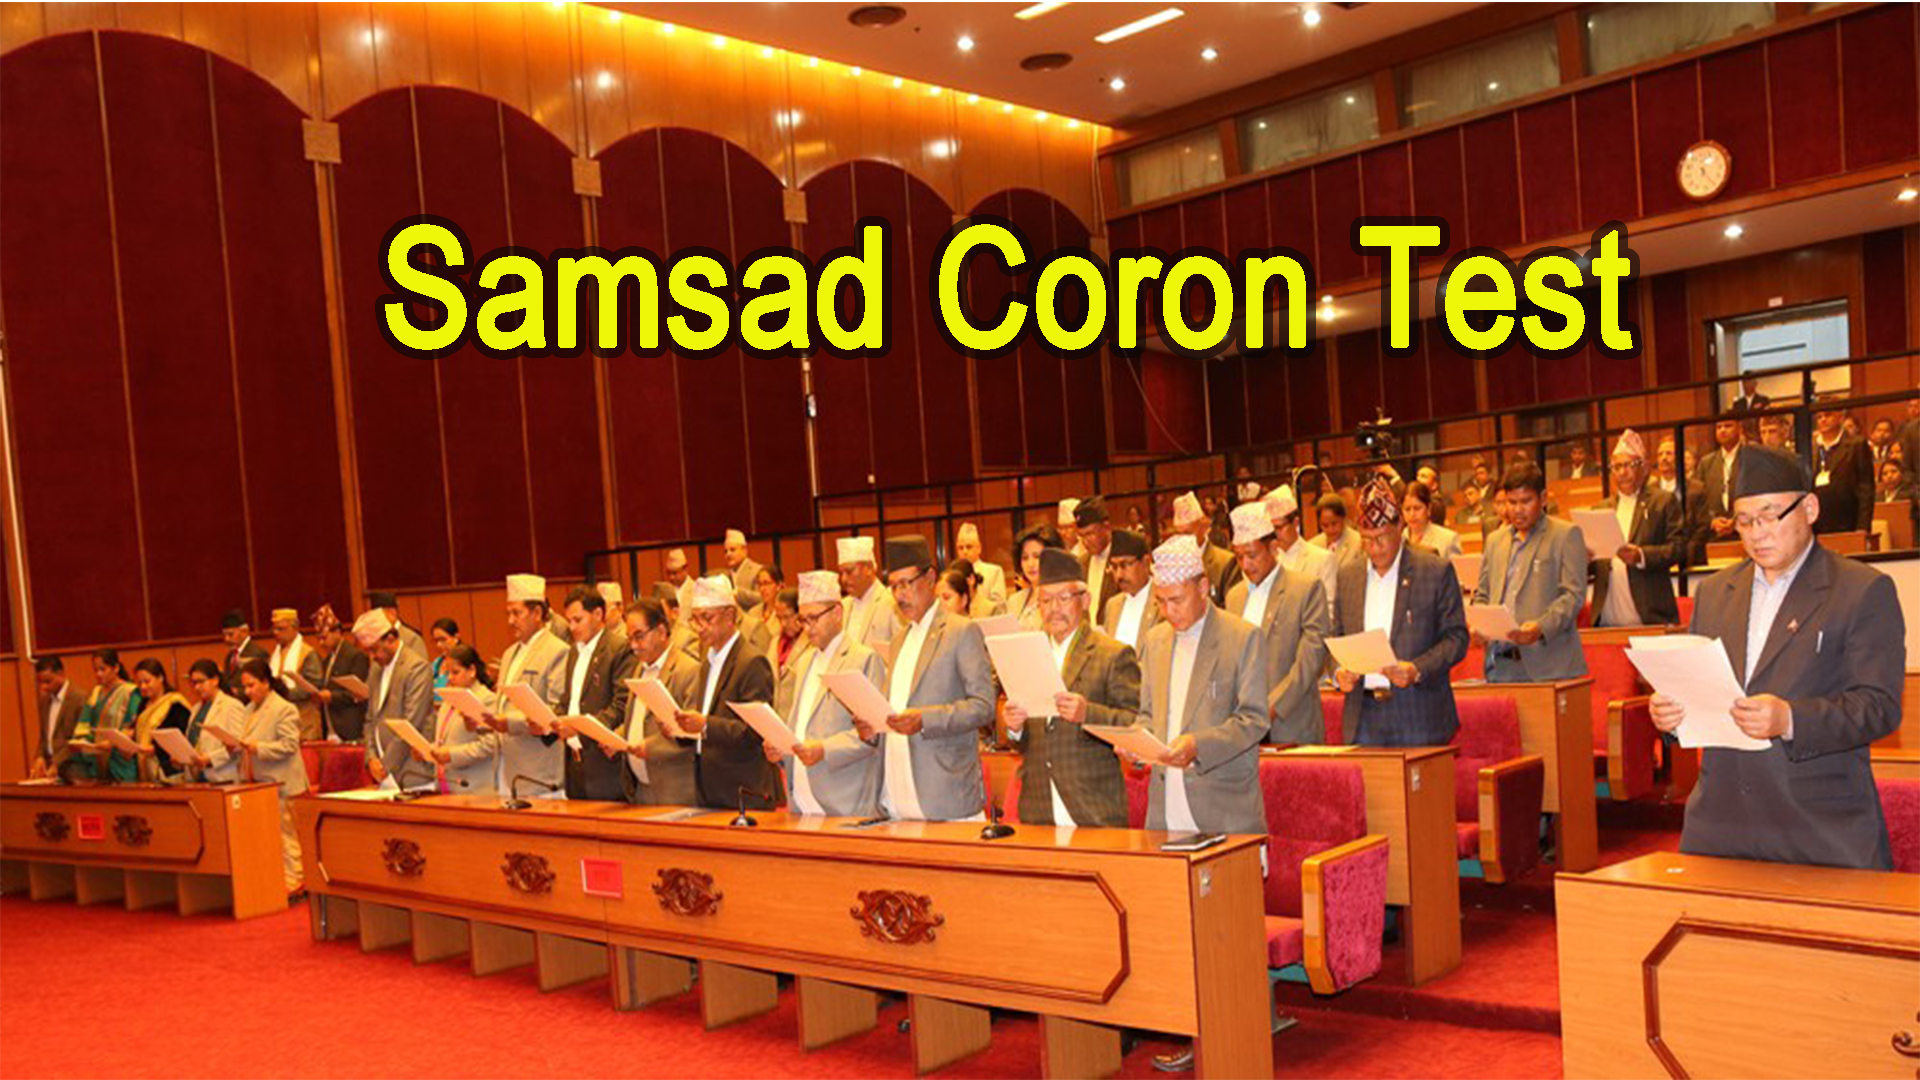 Corona test in Parliament